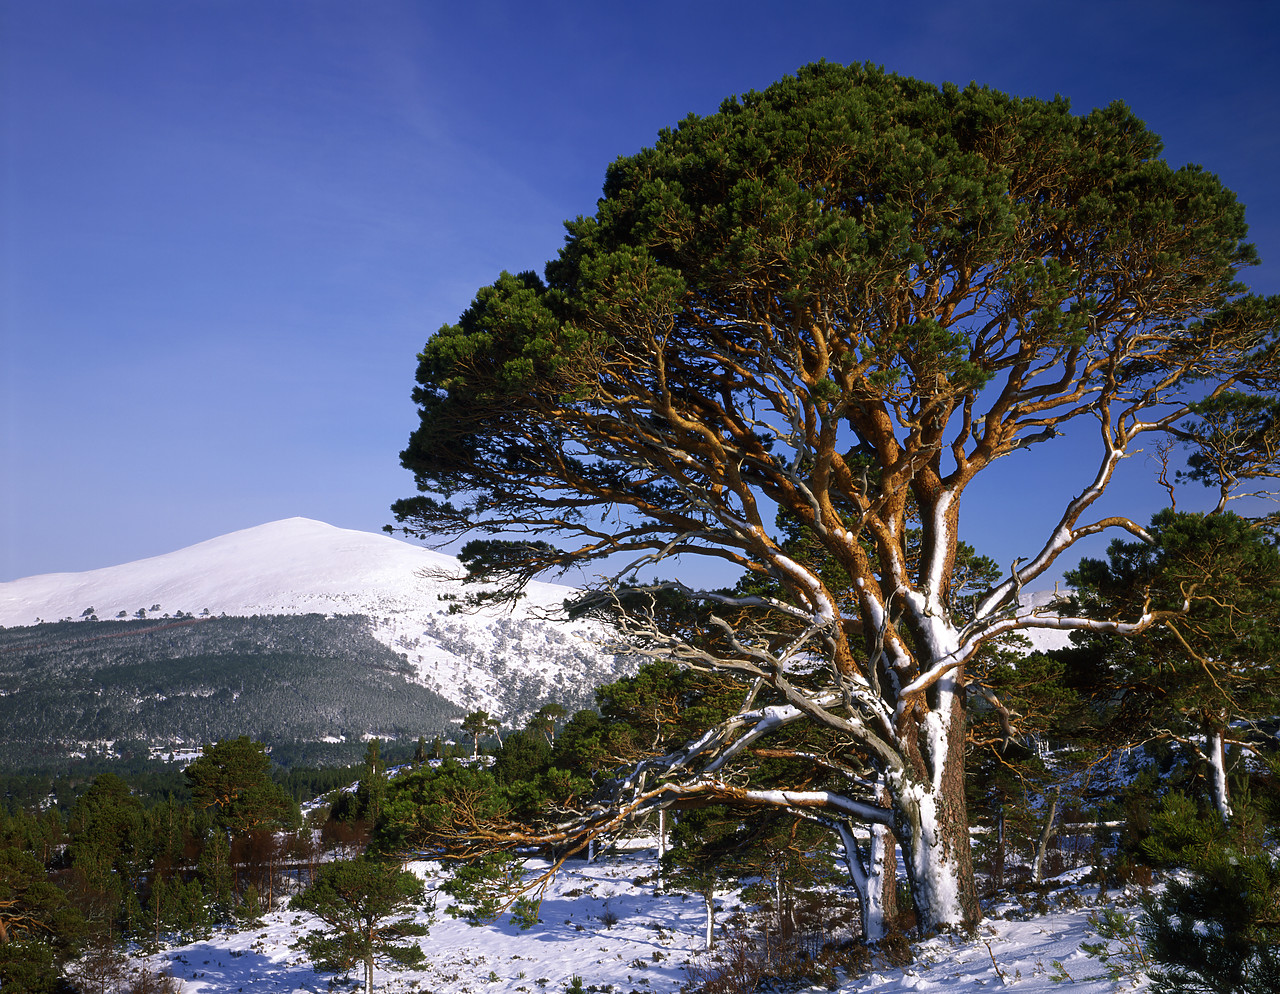 #990046-6 - Scots Pines in Winter near Aviemore, Highland Region, Scotland